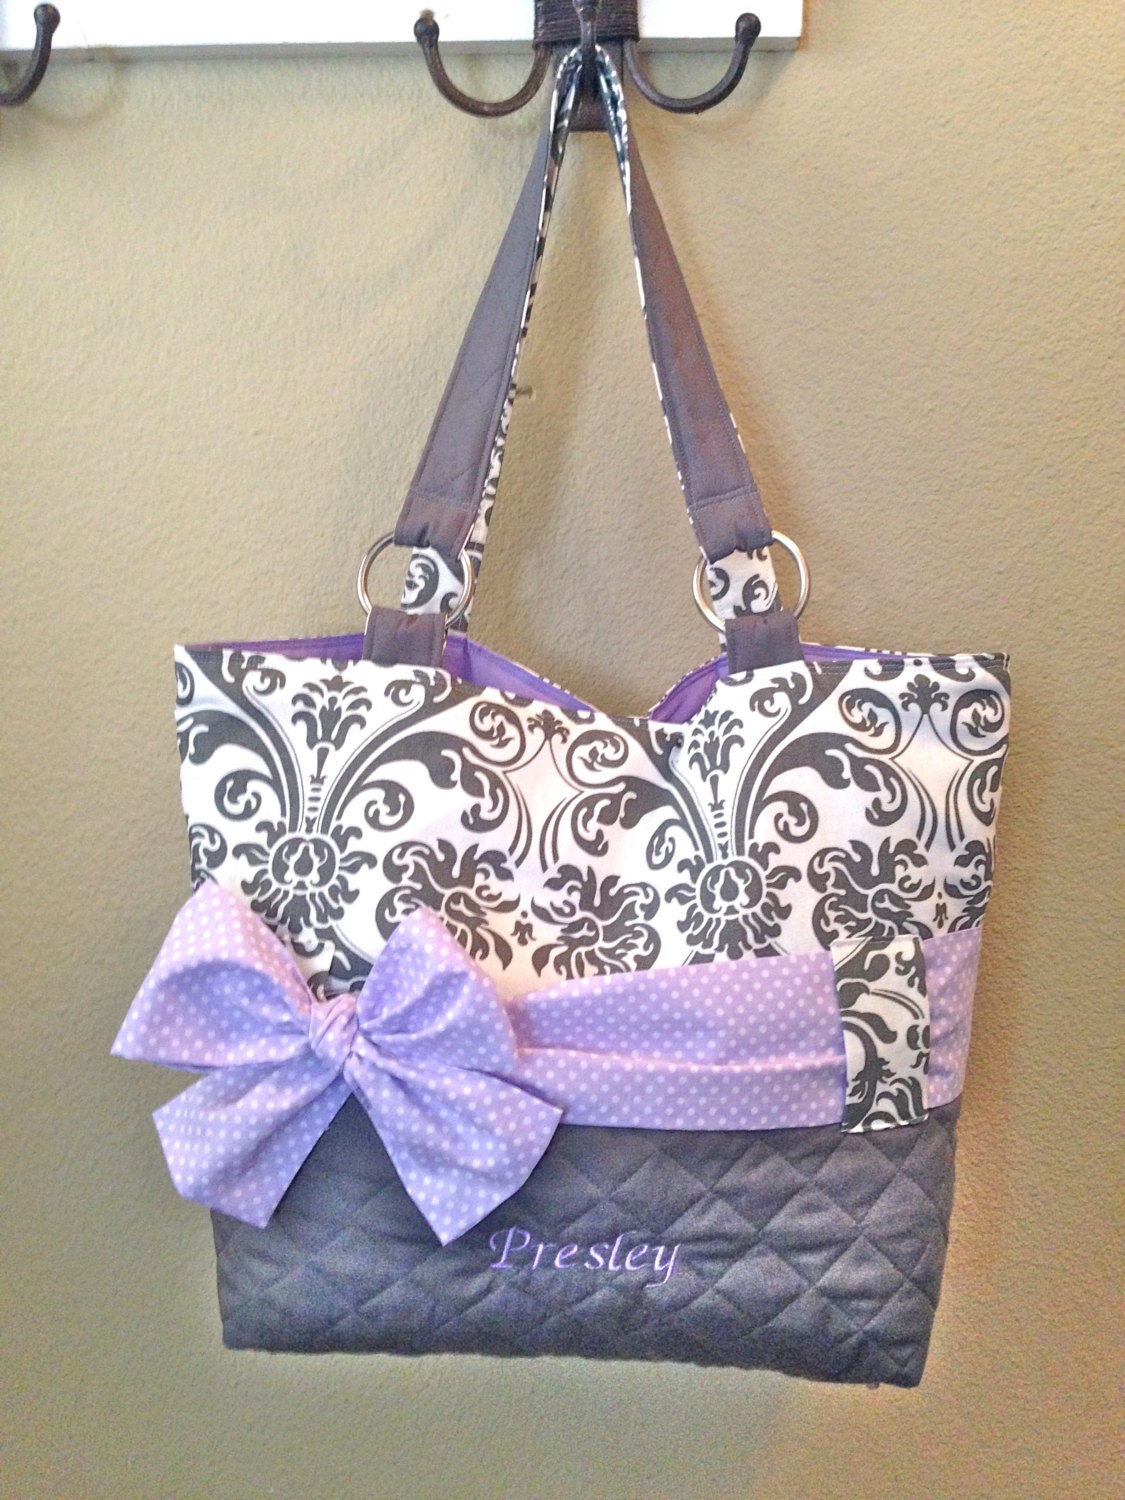 Personalized Diaper Bag In Lavender & Grey Damask.